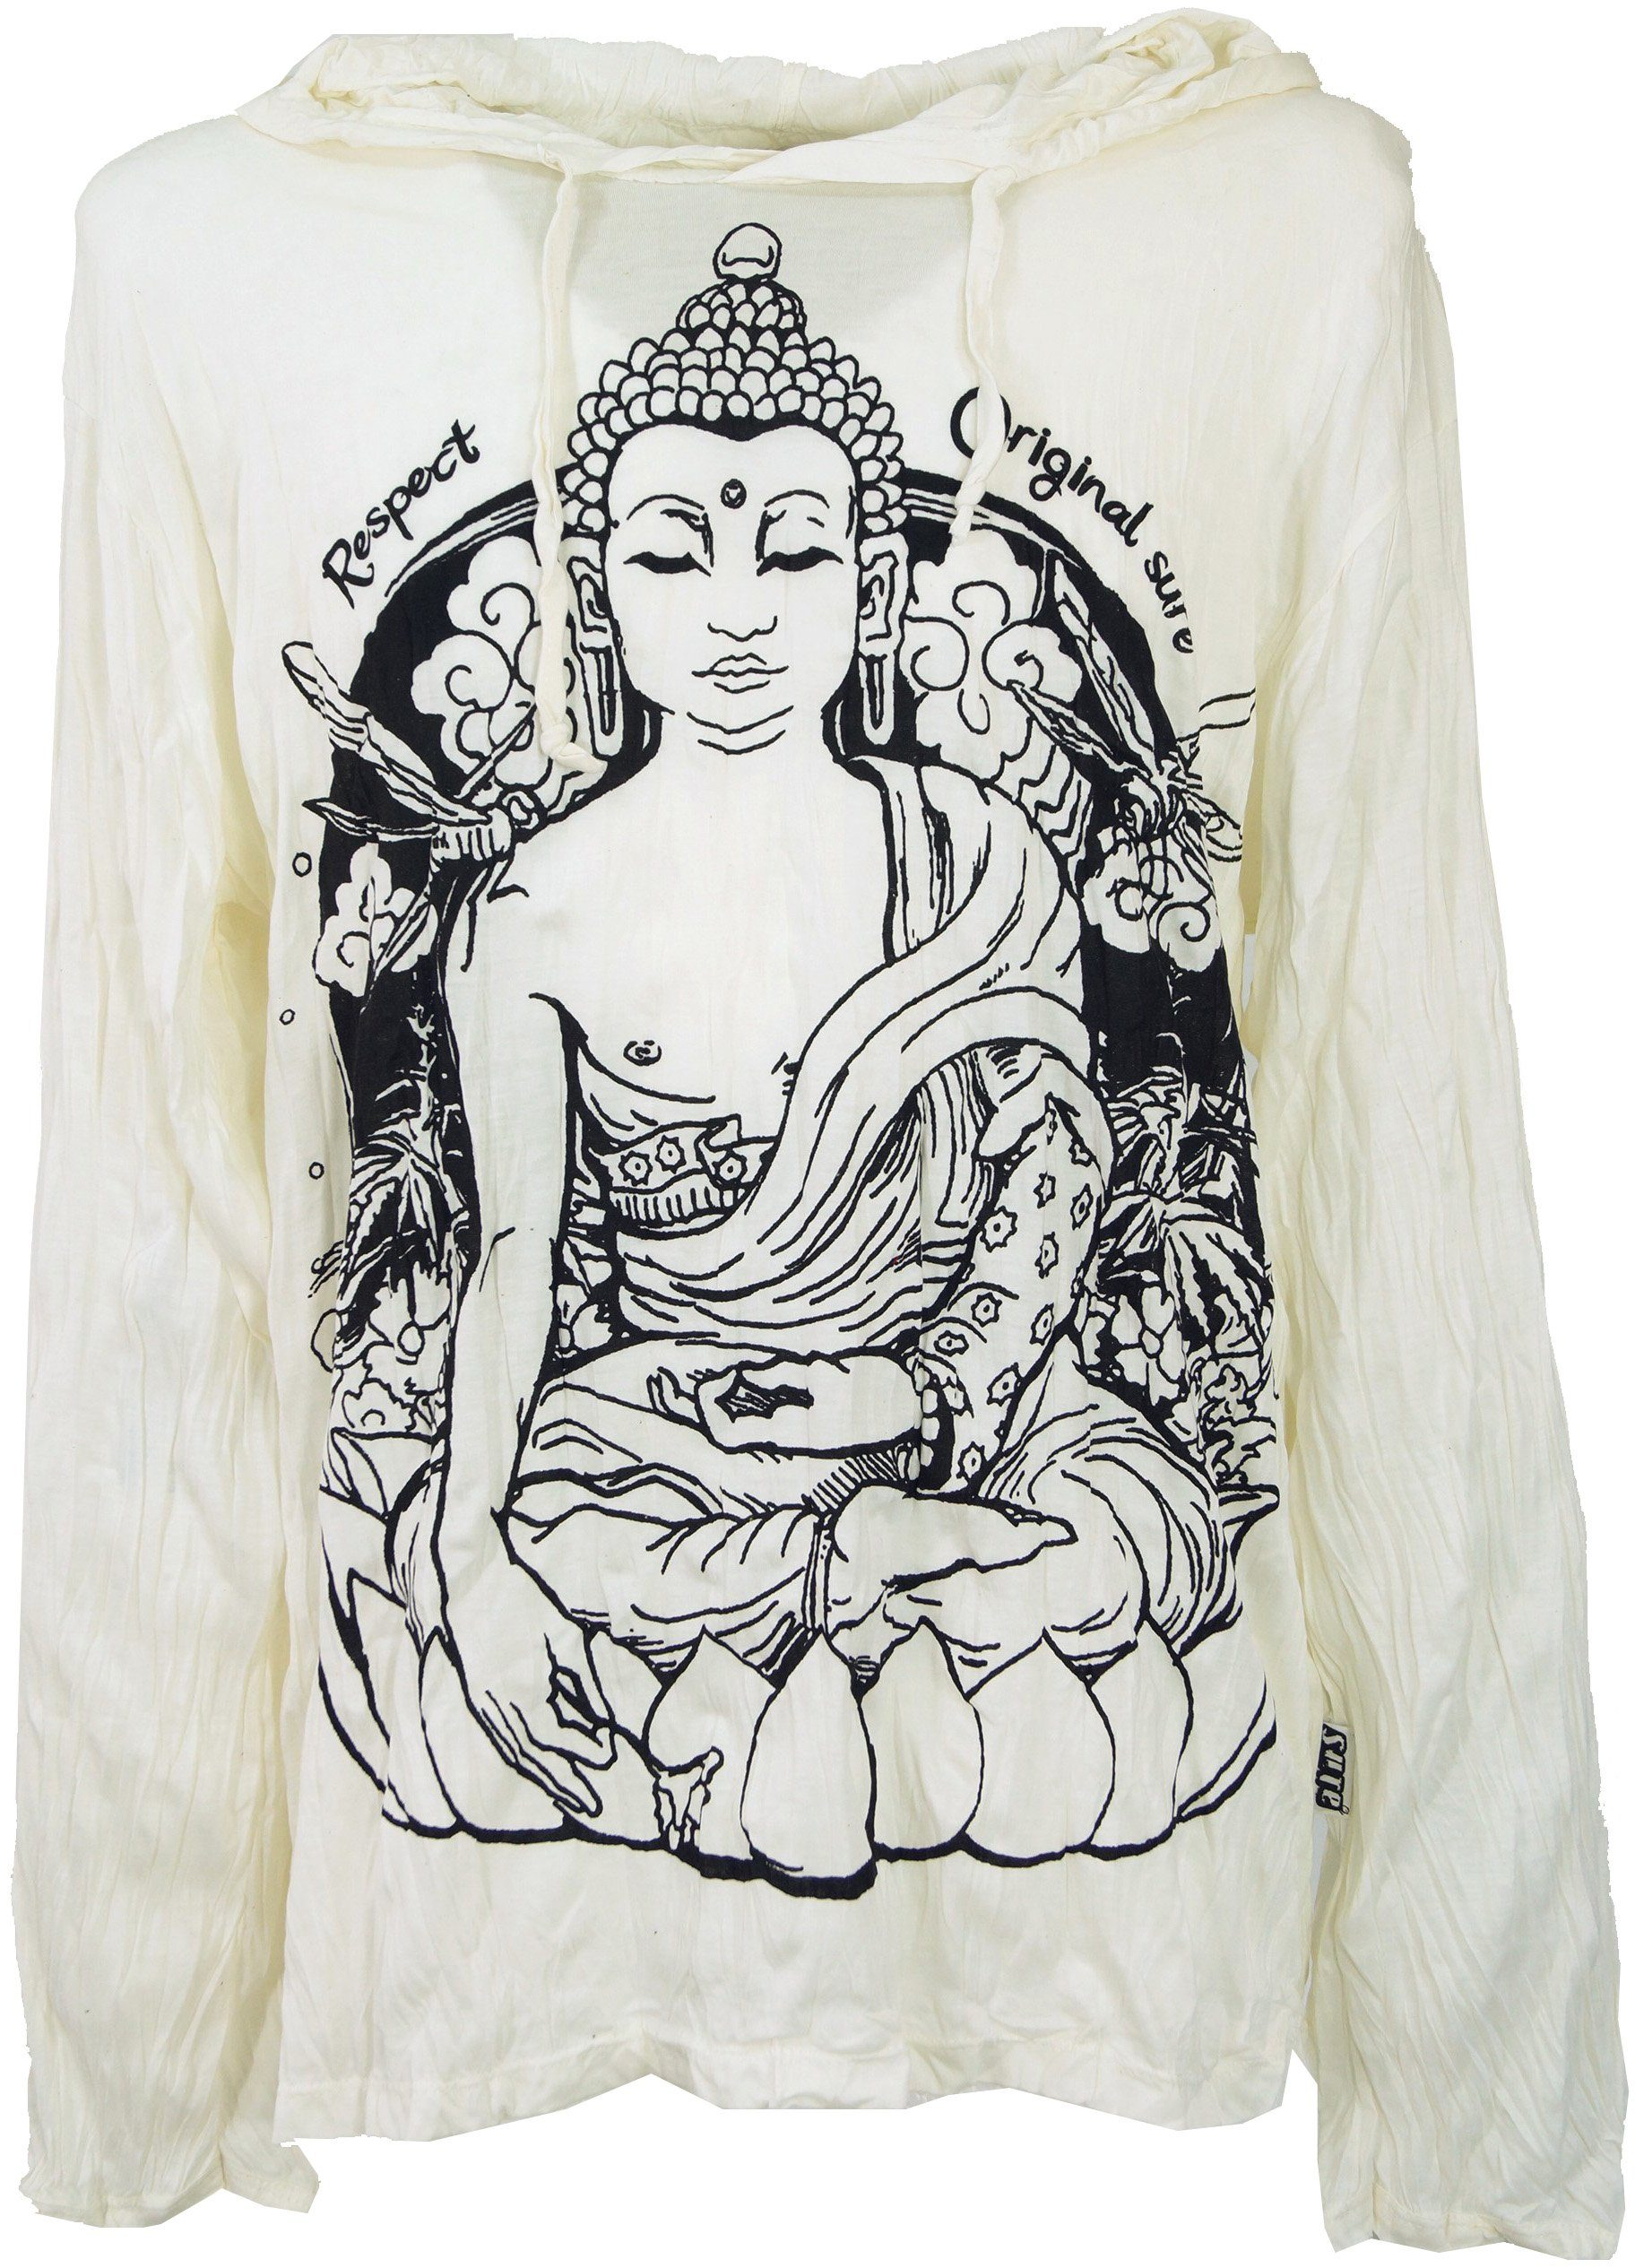 Guru-Shop T-Shirt Sure Langarmshirt, Kapuzenshirt Meditation.. Goa Style, Festival, alternative Bekleidung weiß